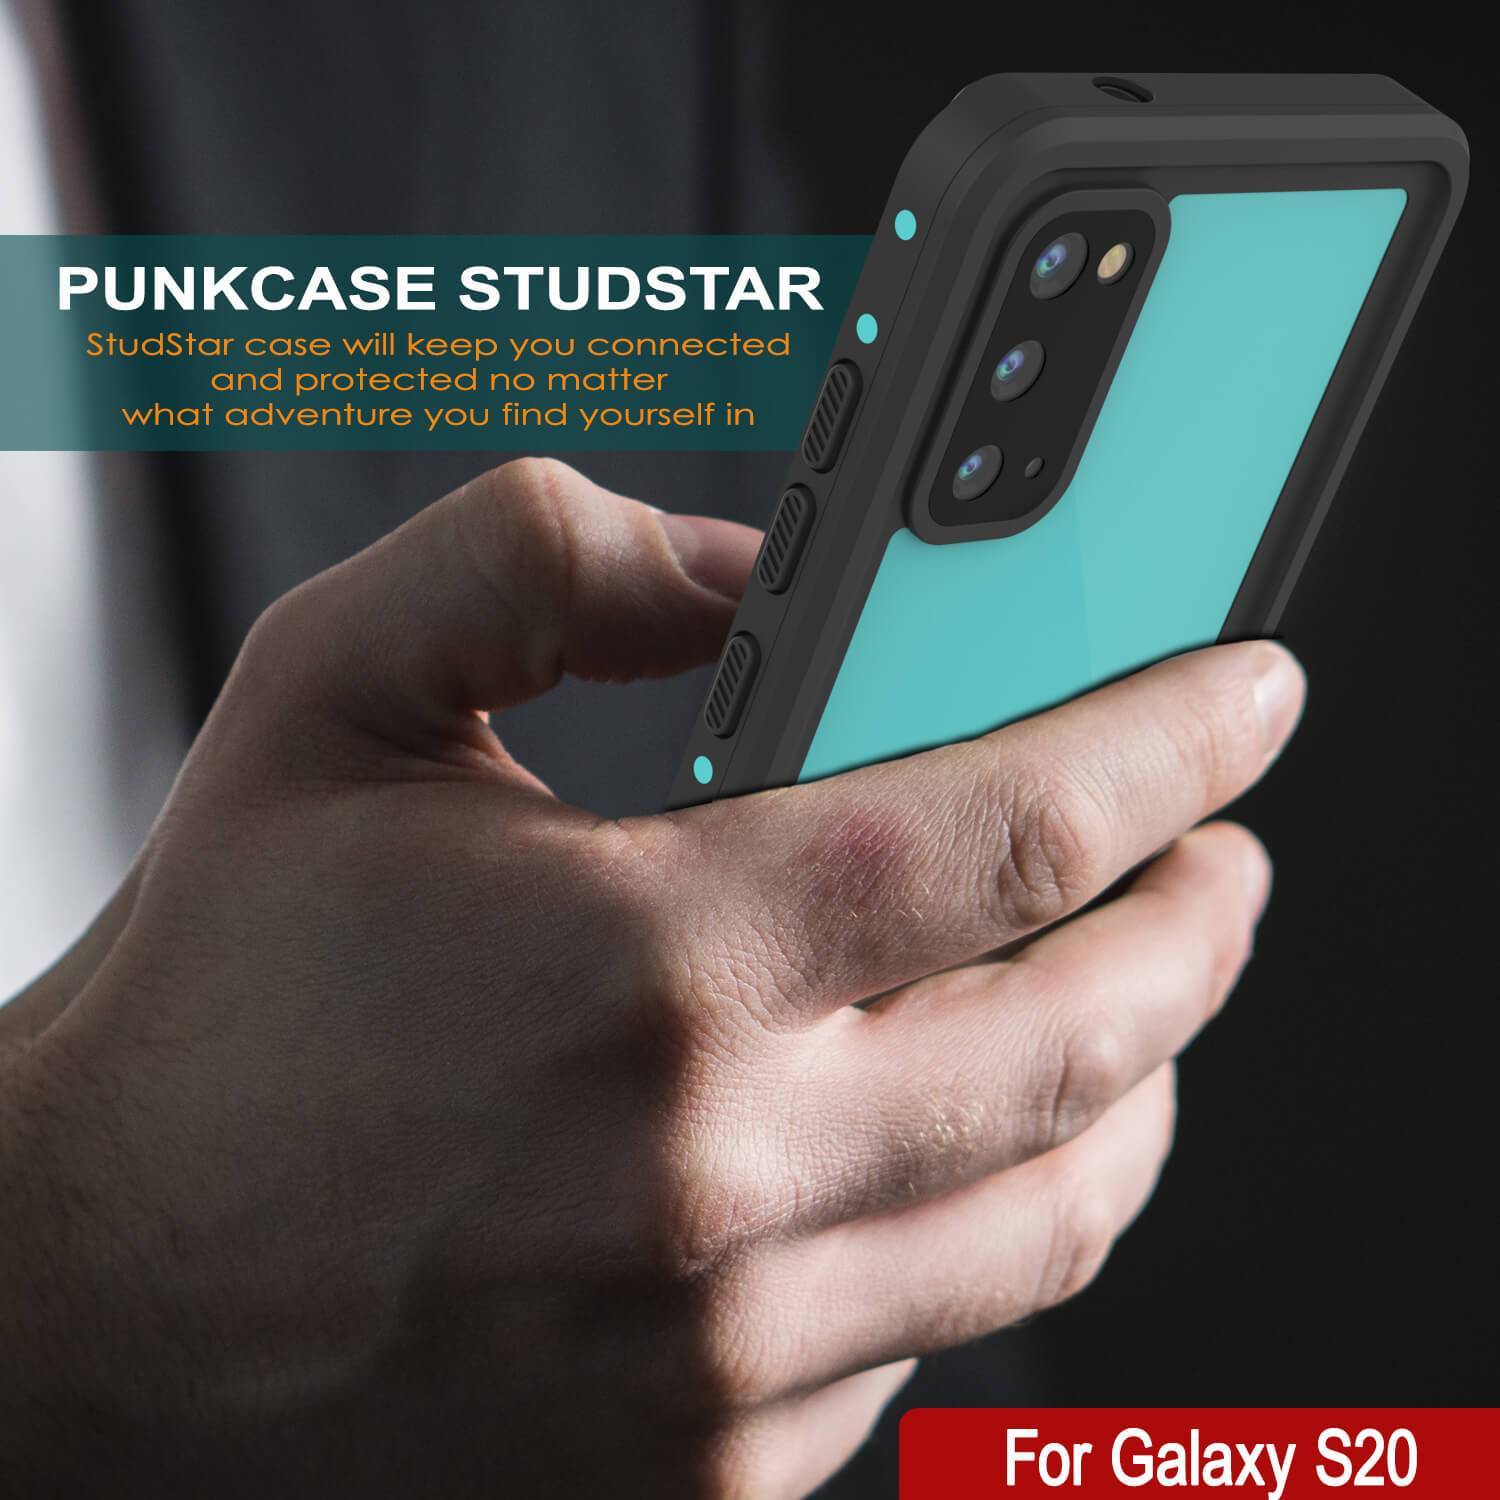 Galaxy S20 Waterproof Case PunkCase StudStar Teal Thin 6.6ft Underwater IP68 Shock/Snow Proof